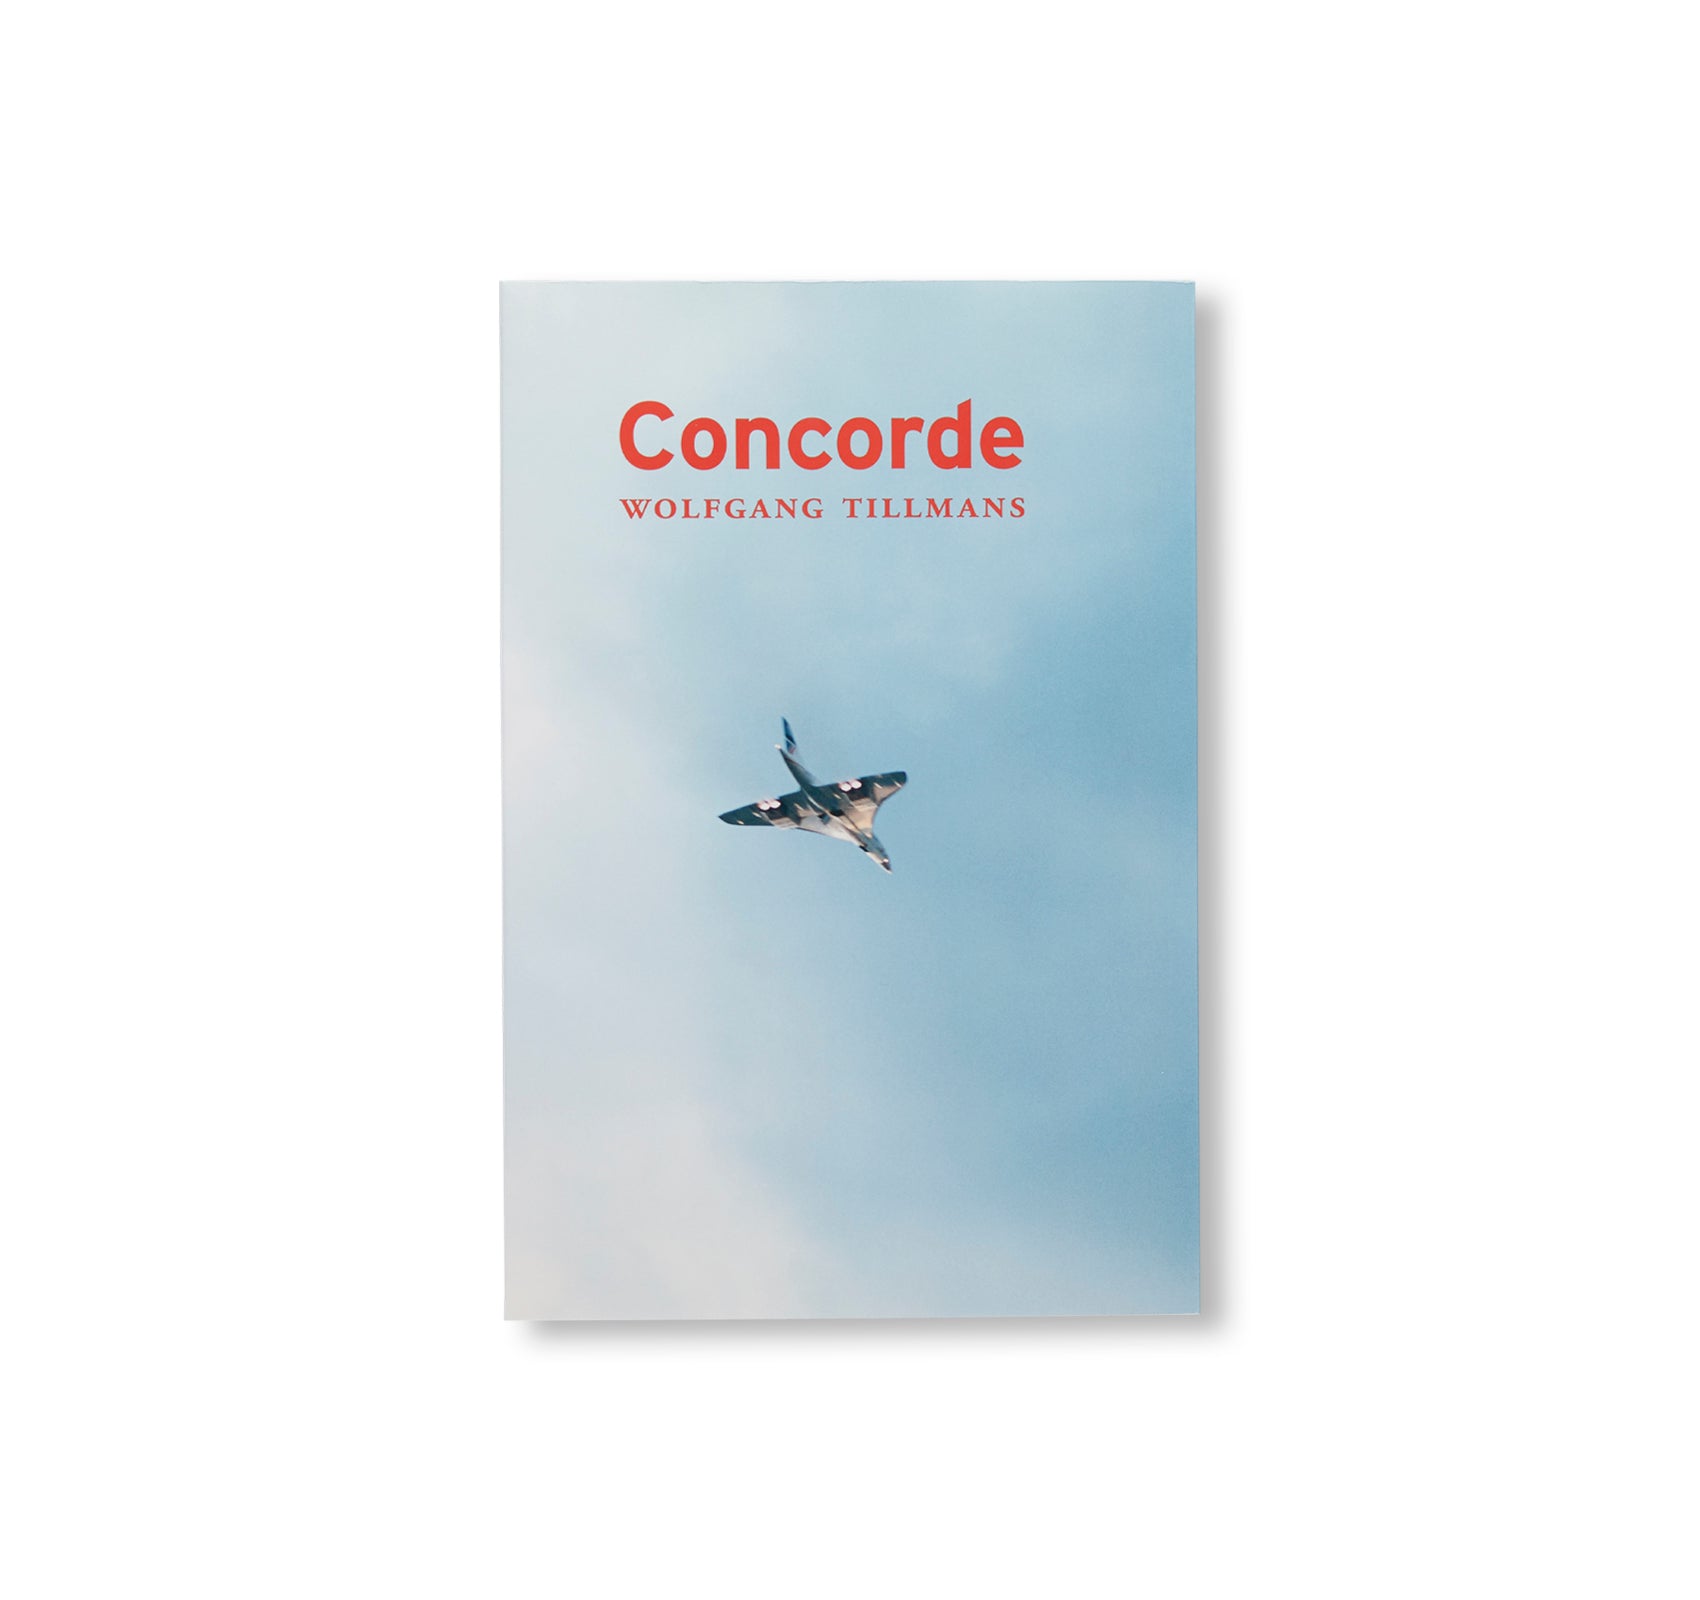 Wolfgang Tillmans: Concorde 英語版